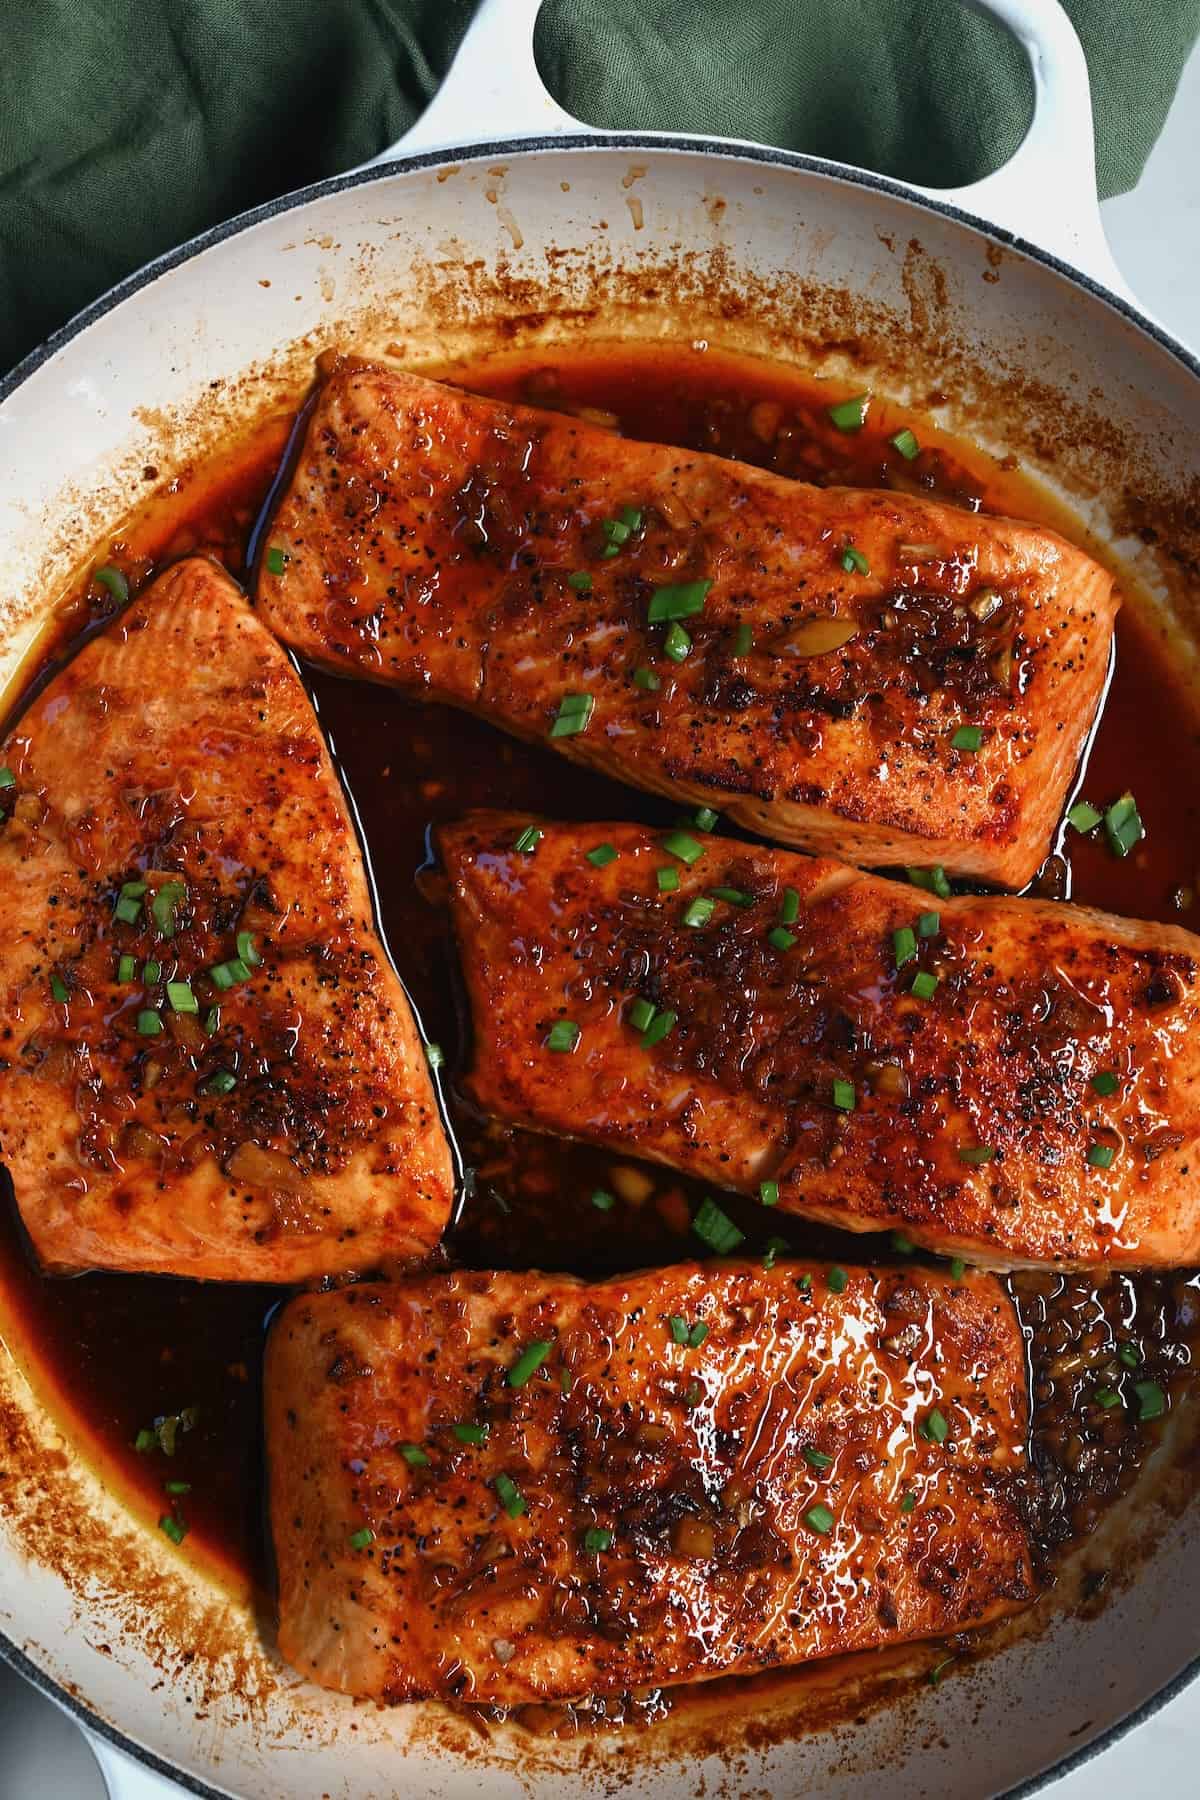 Honey glazed salmon in a pan